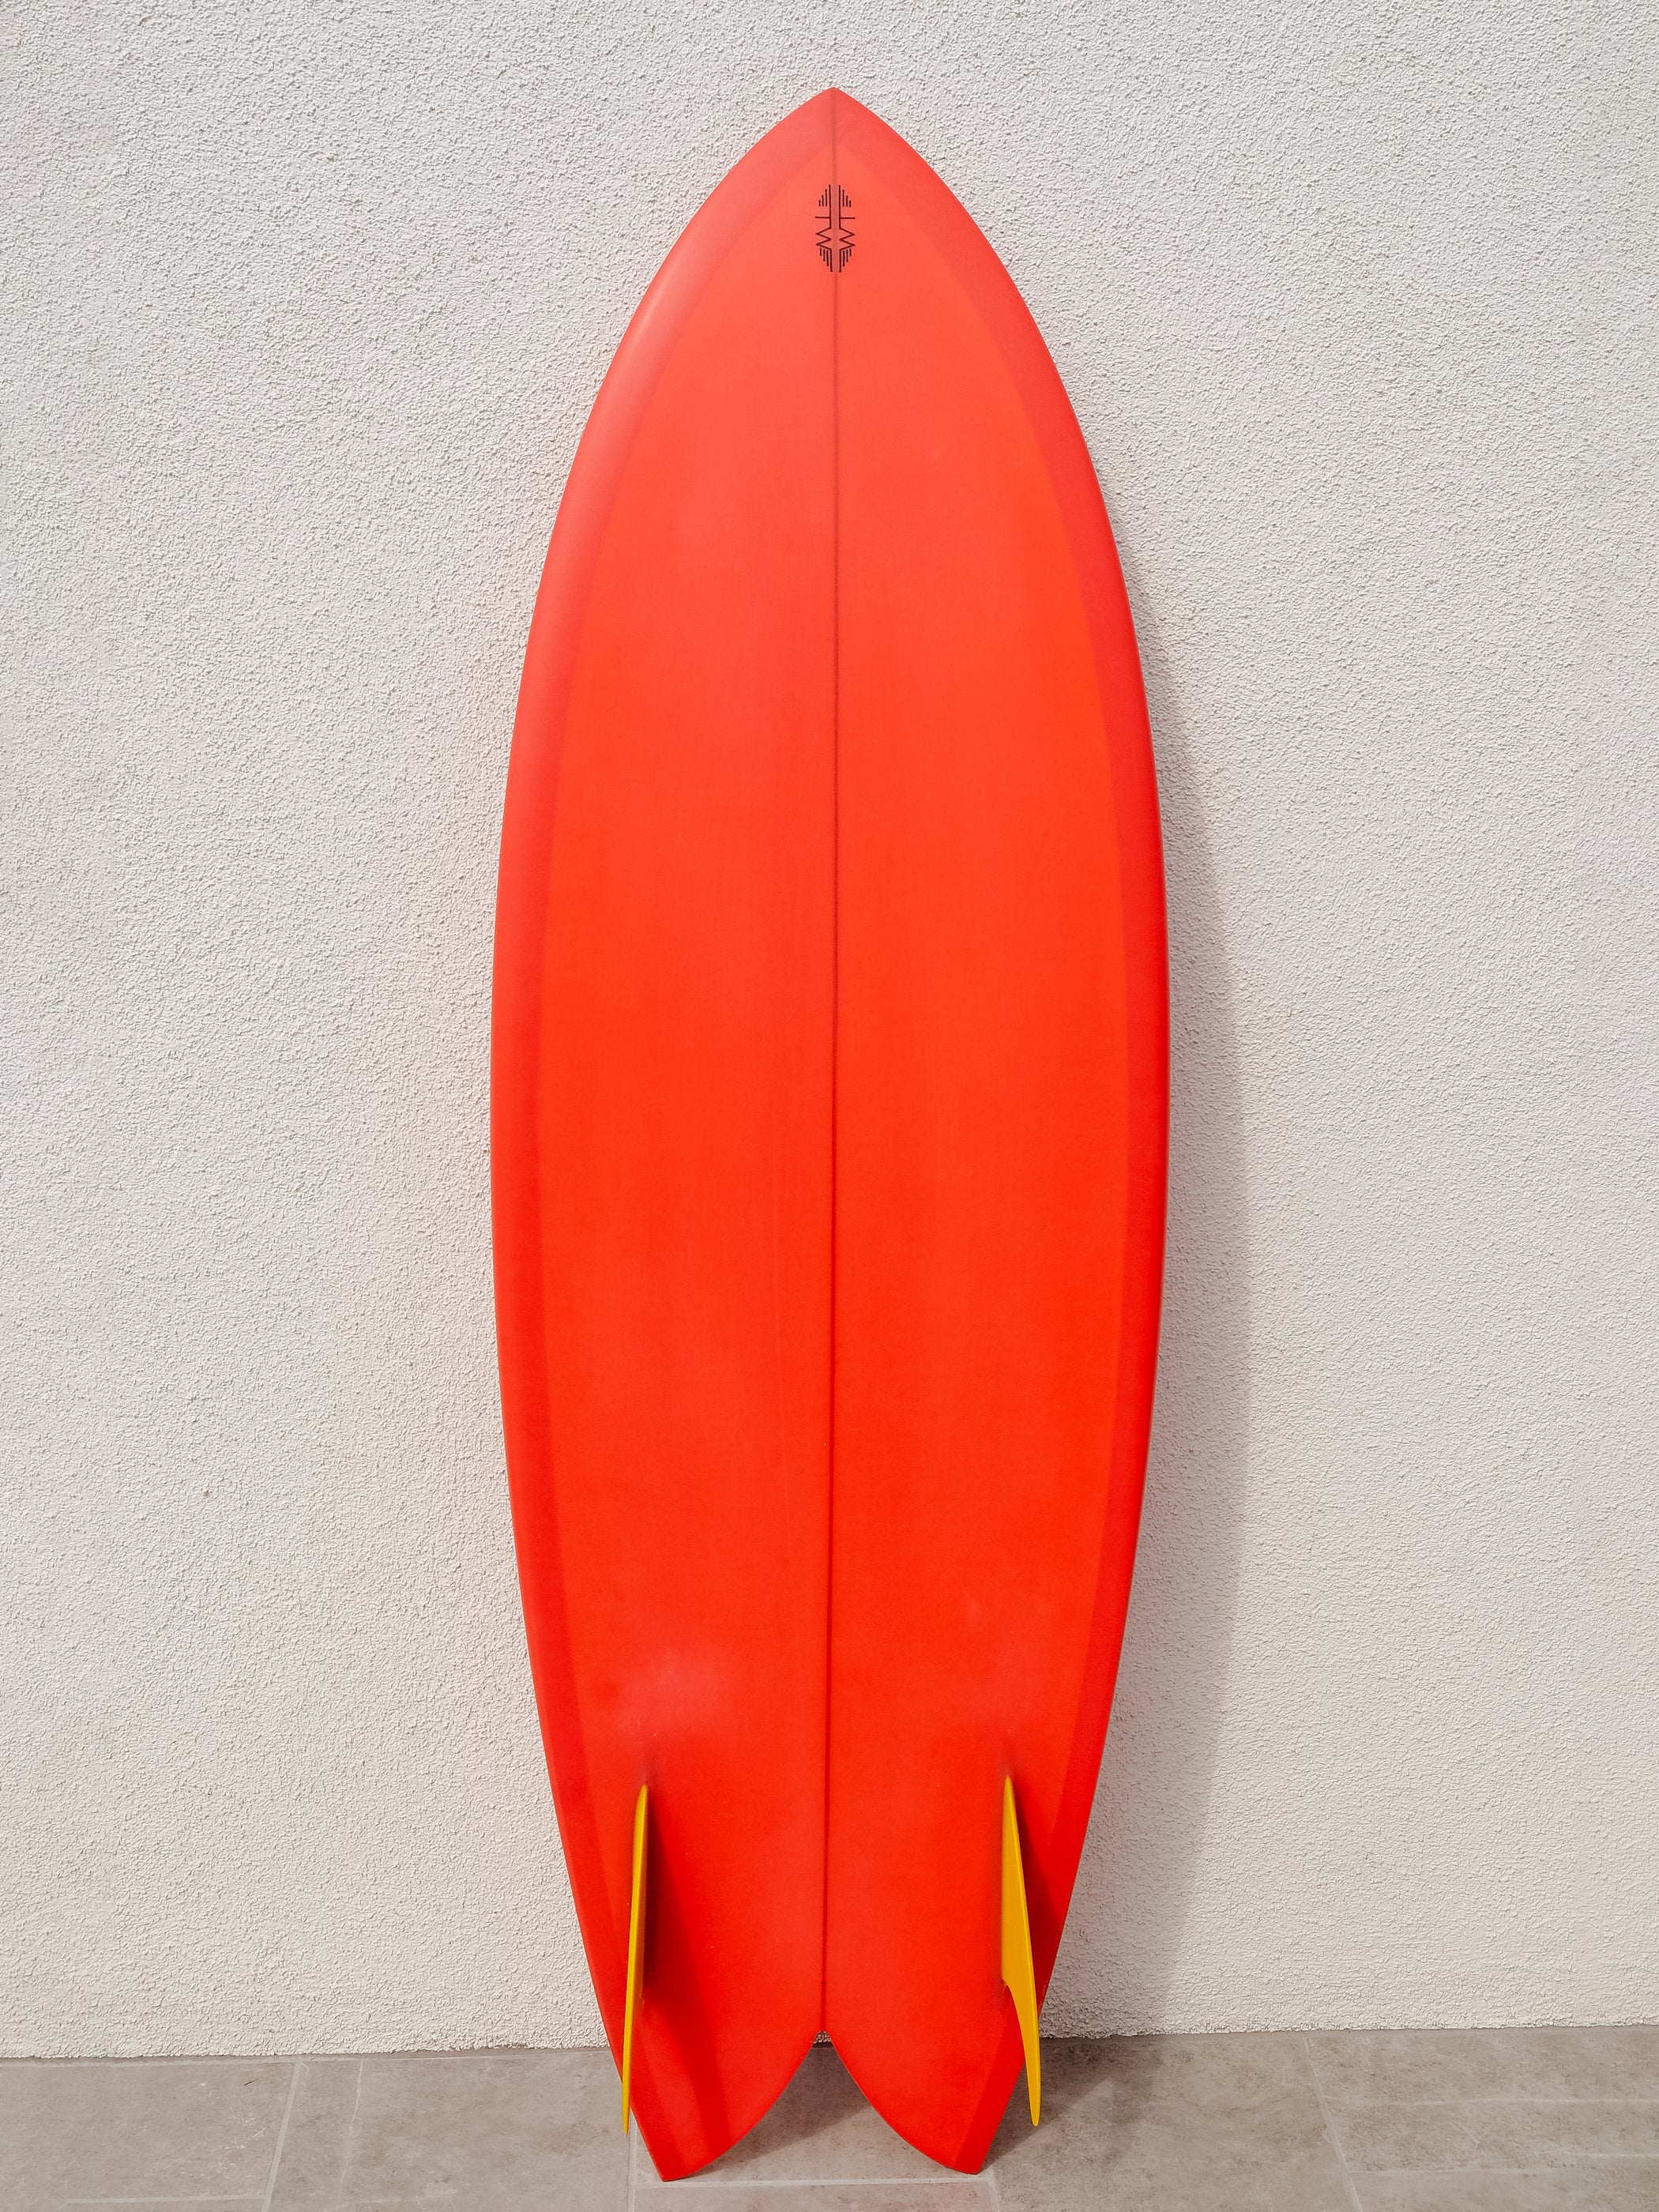 Tyler Warren | Performance Dream Fish 5’8” Sunrise Orange Surfboard